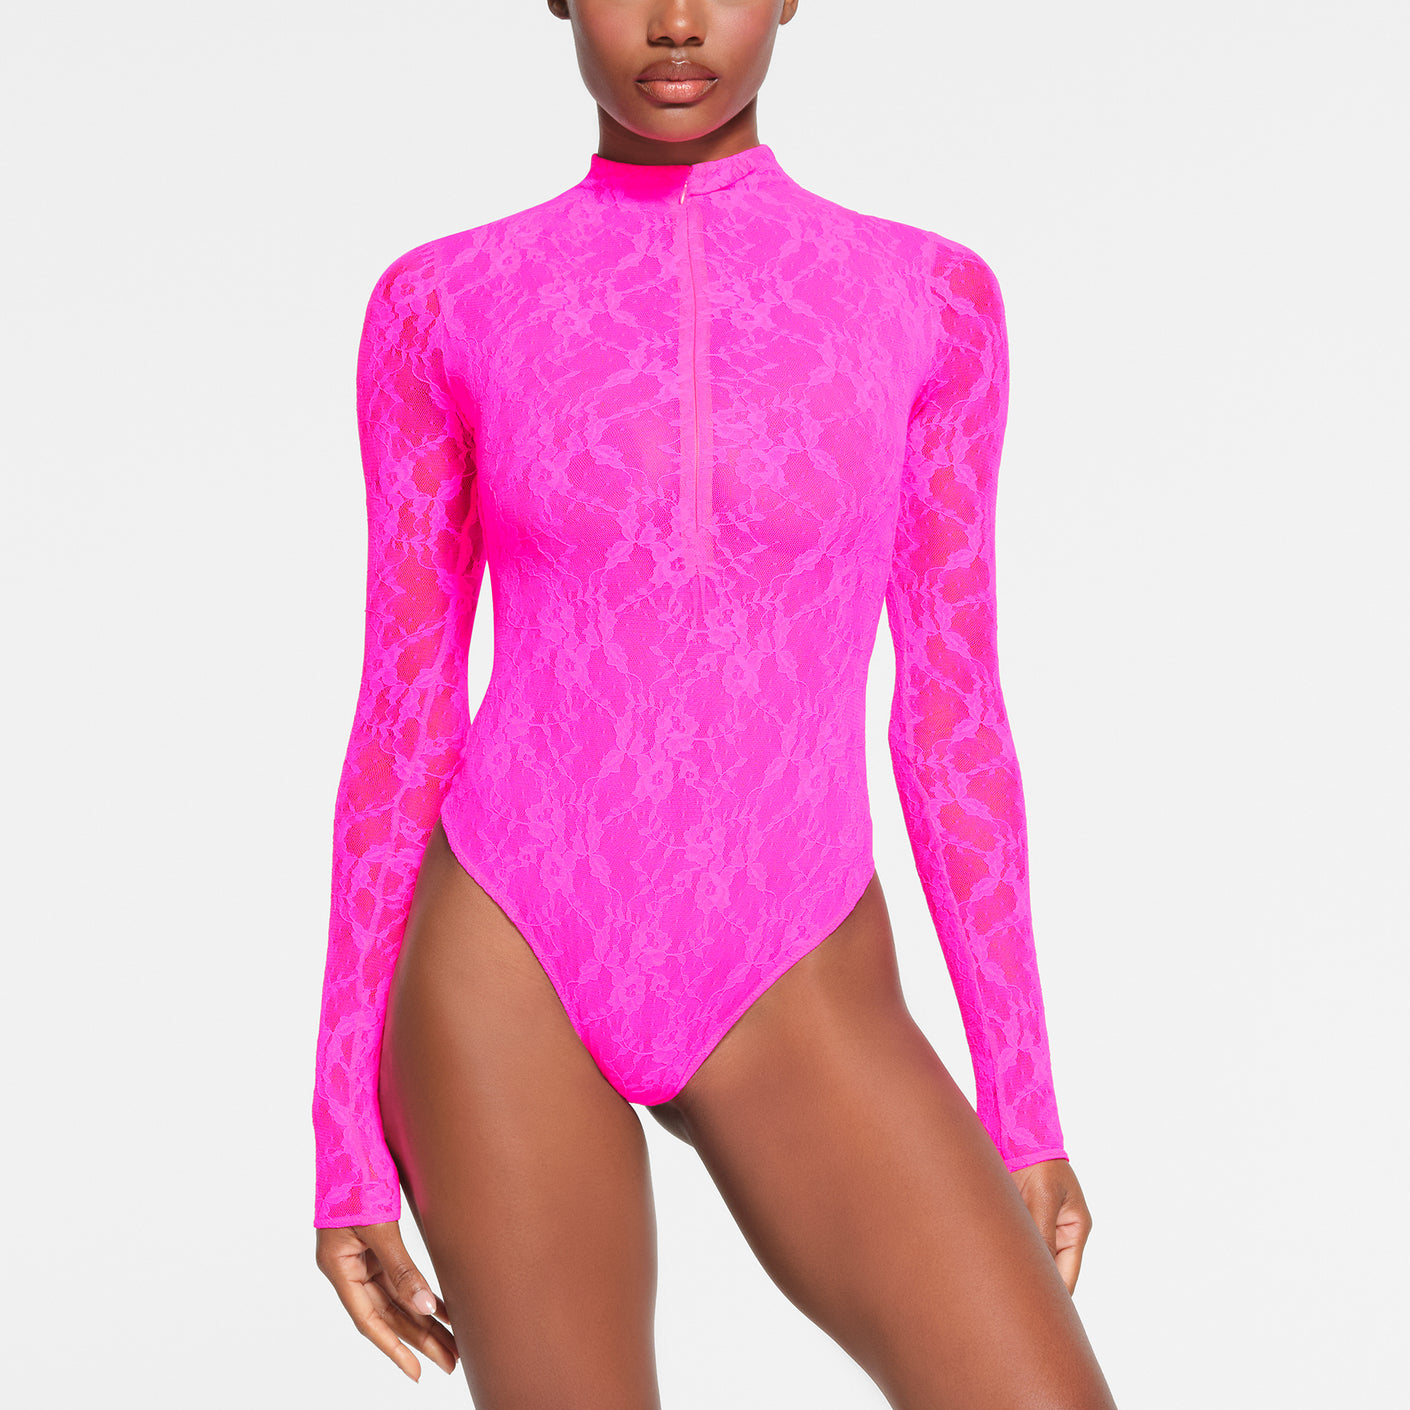 Women's High Cut Long Sleeve Neon Bodysuit Thong Leotard (Color